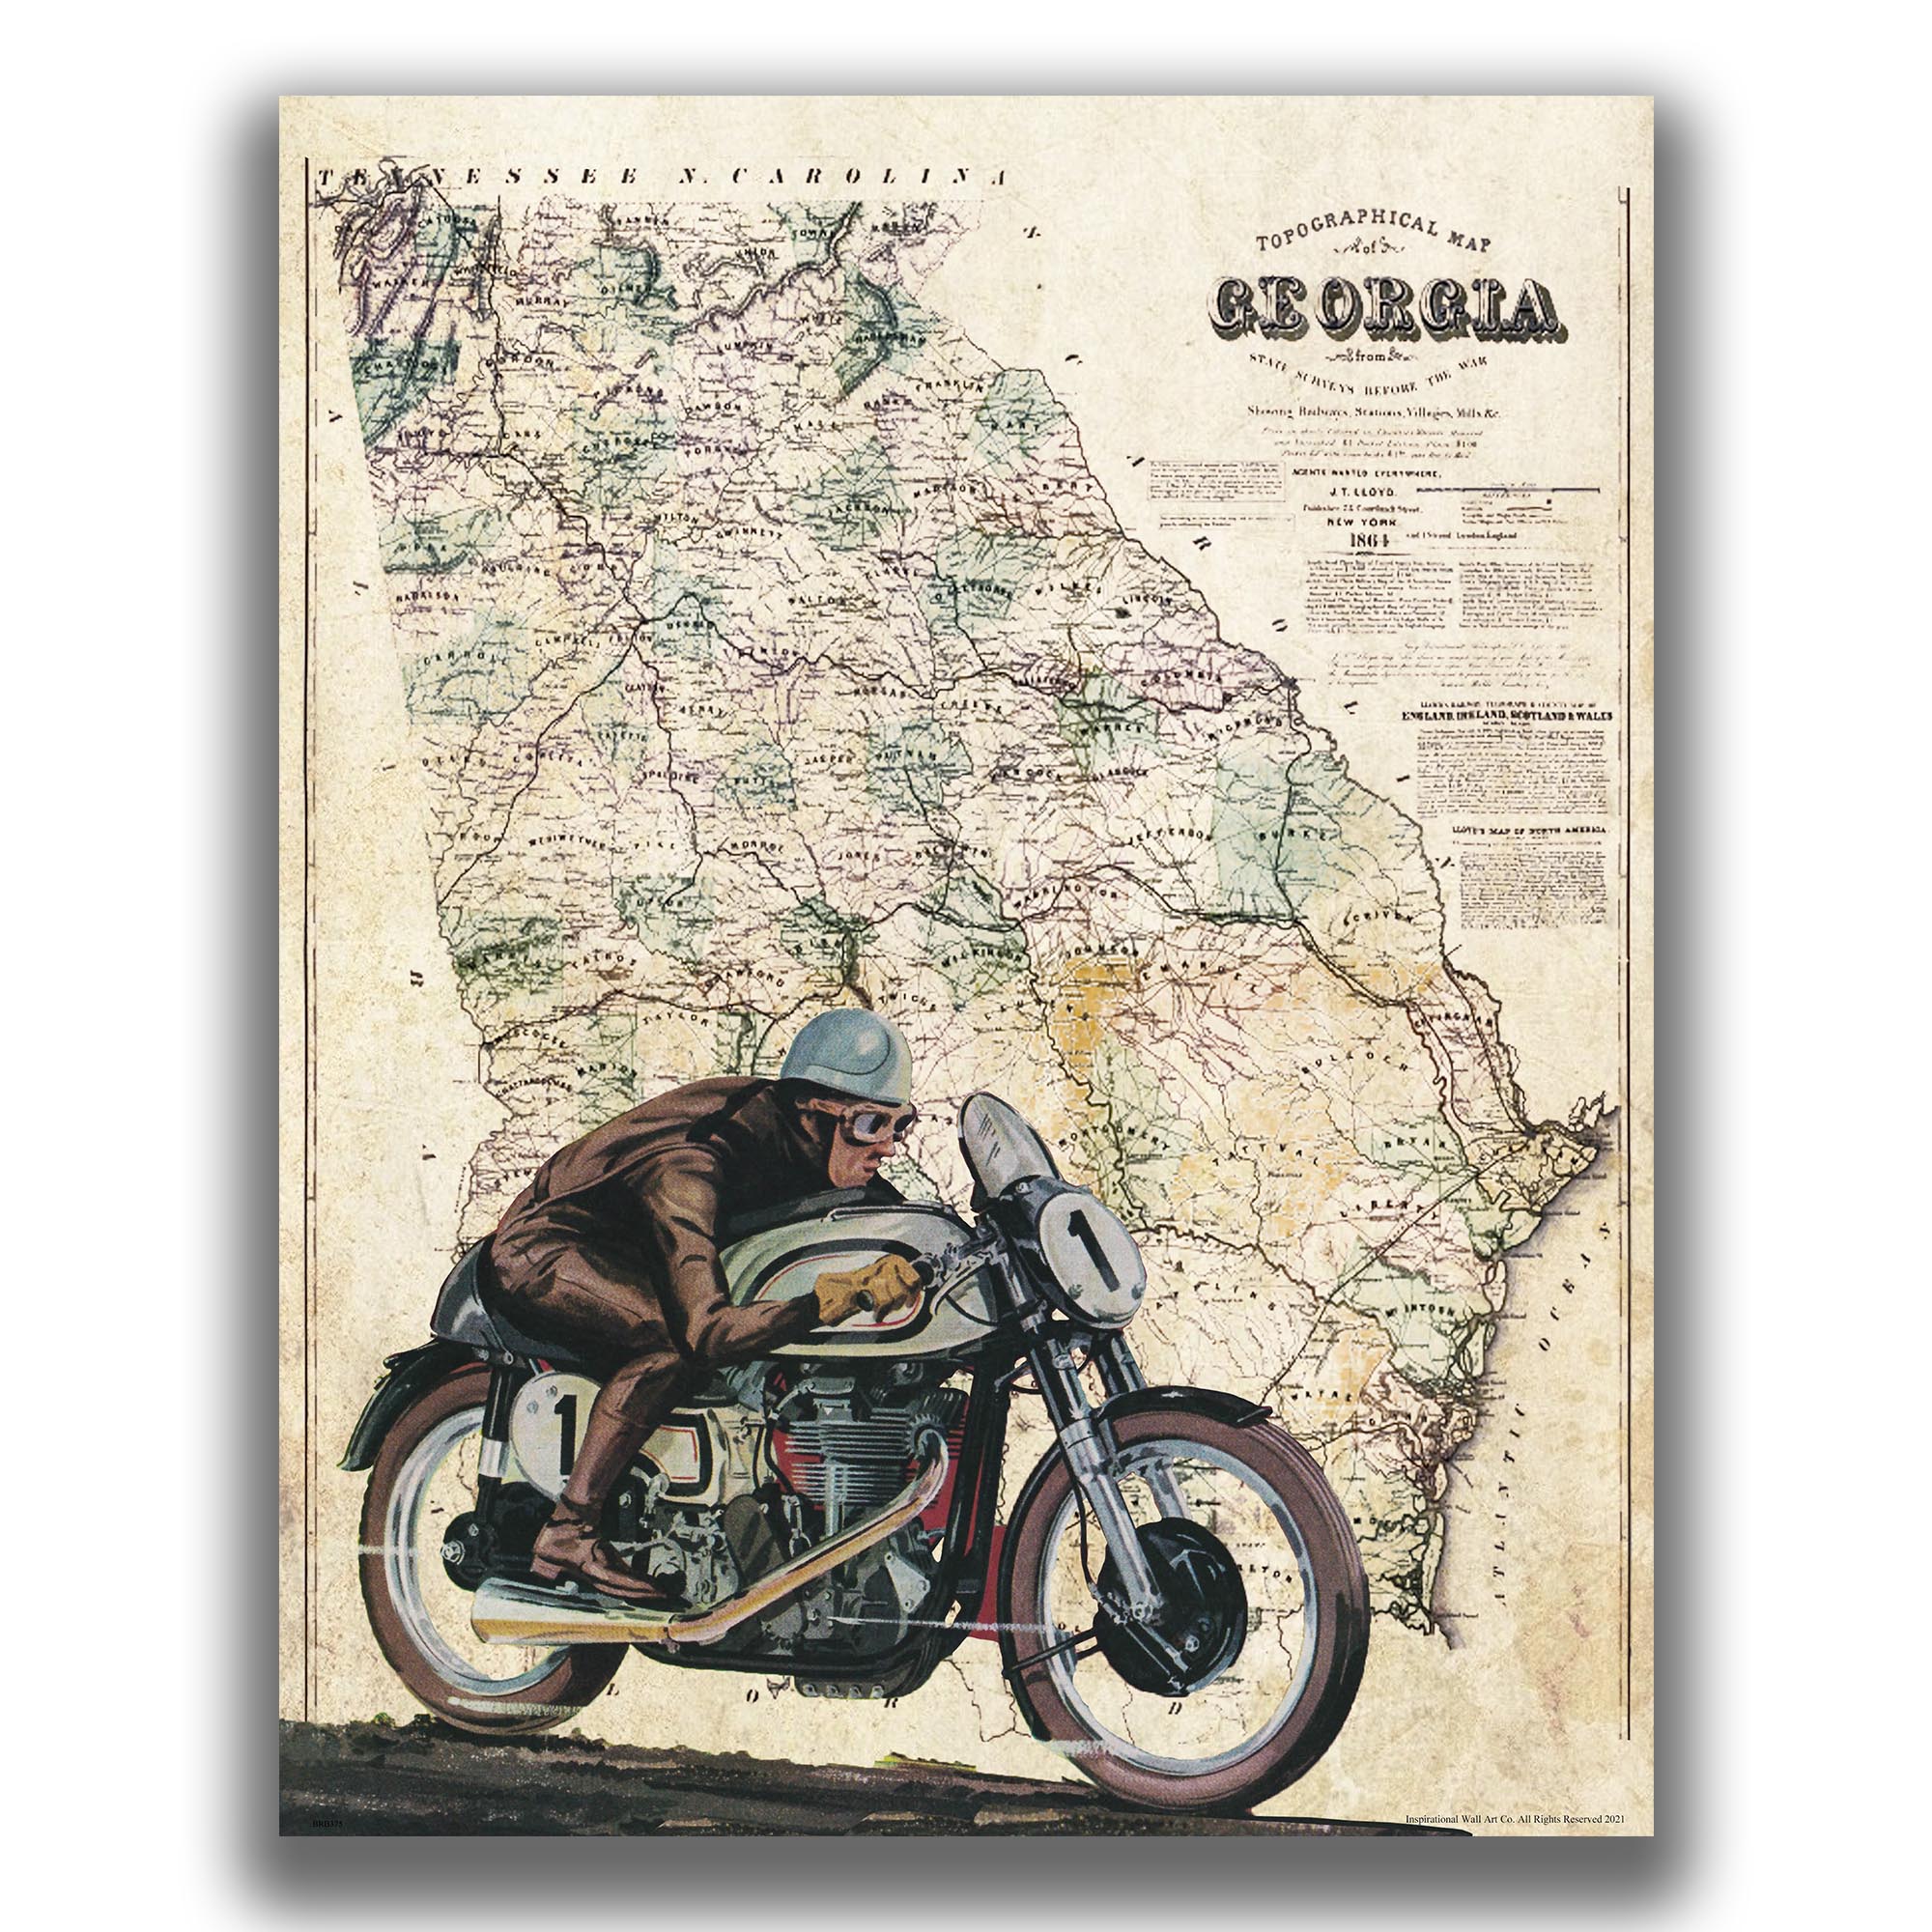 Georgia - Motorcycle Poster